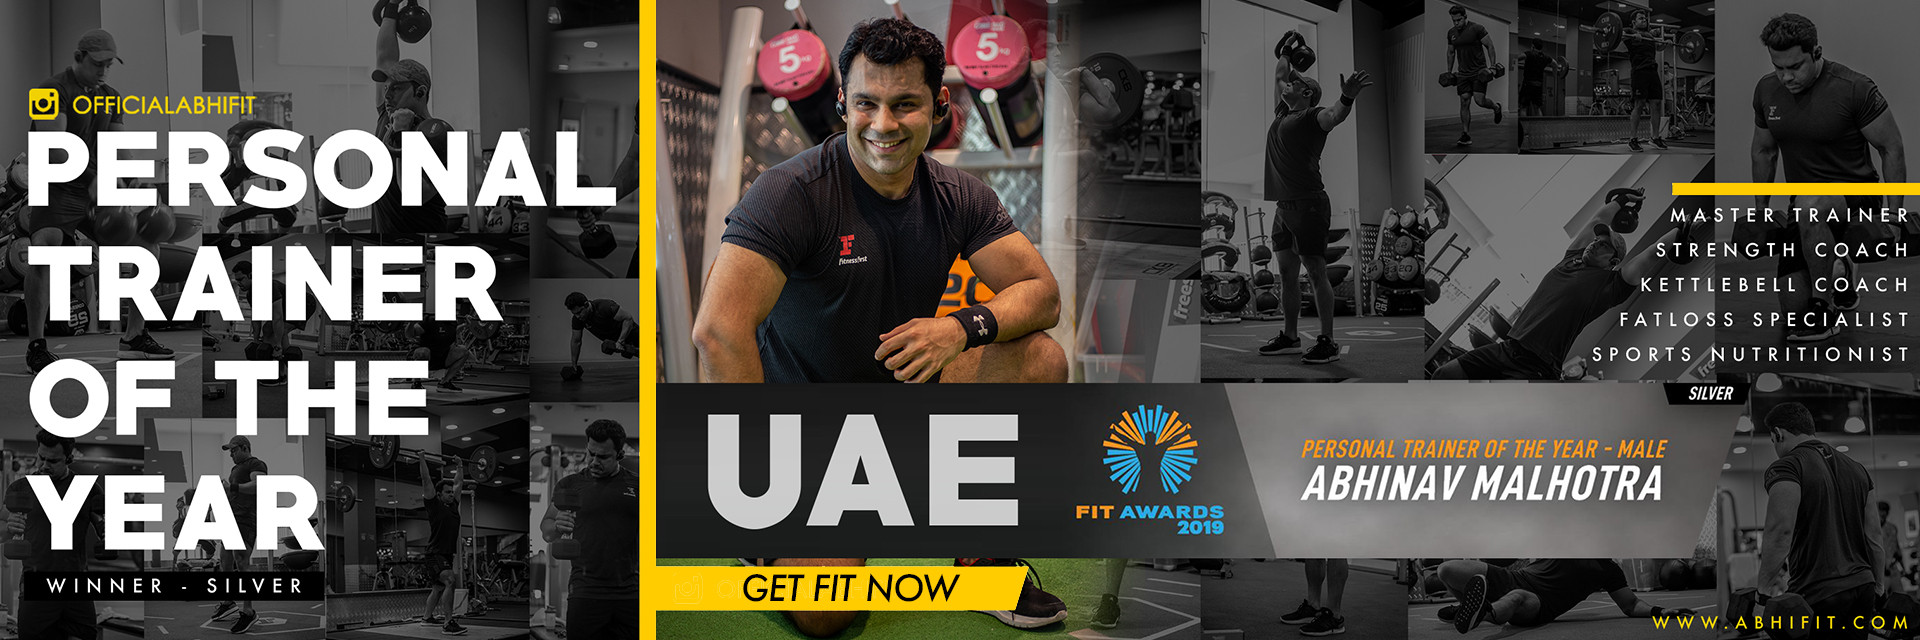 AbhiFit - Best Personal Trainer of UAE Dubai Abu Dhabi All Emirates - Abhinav Malhotra